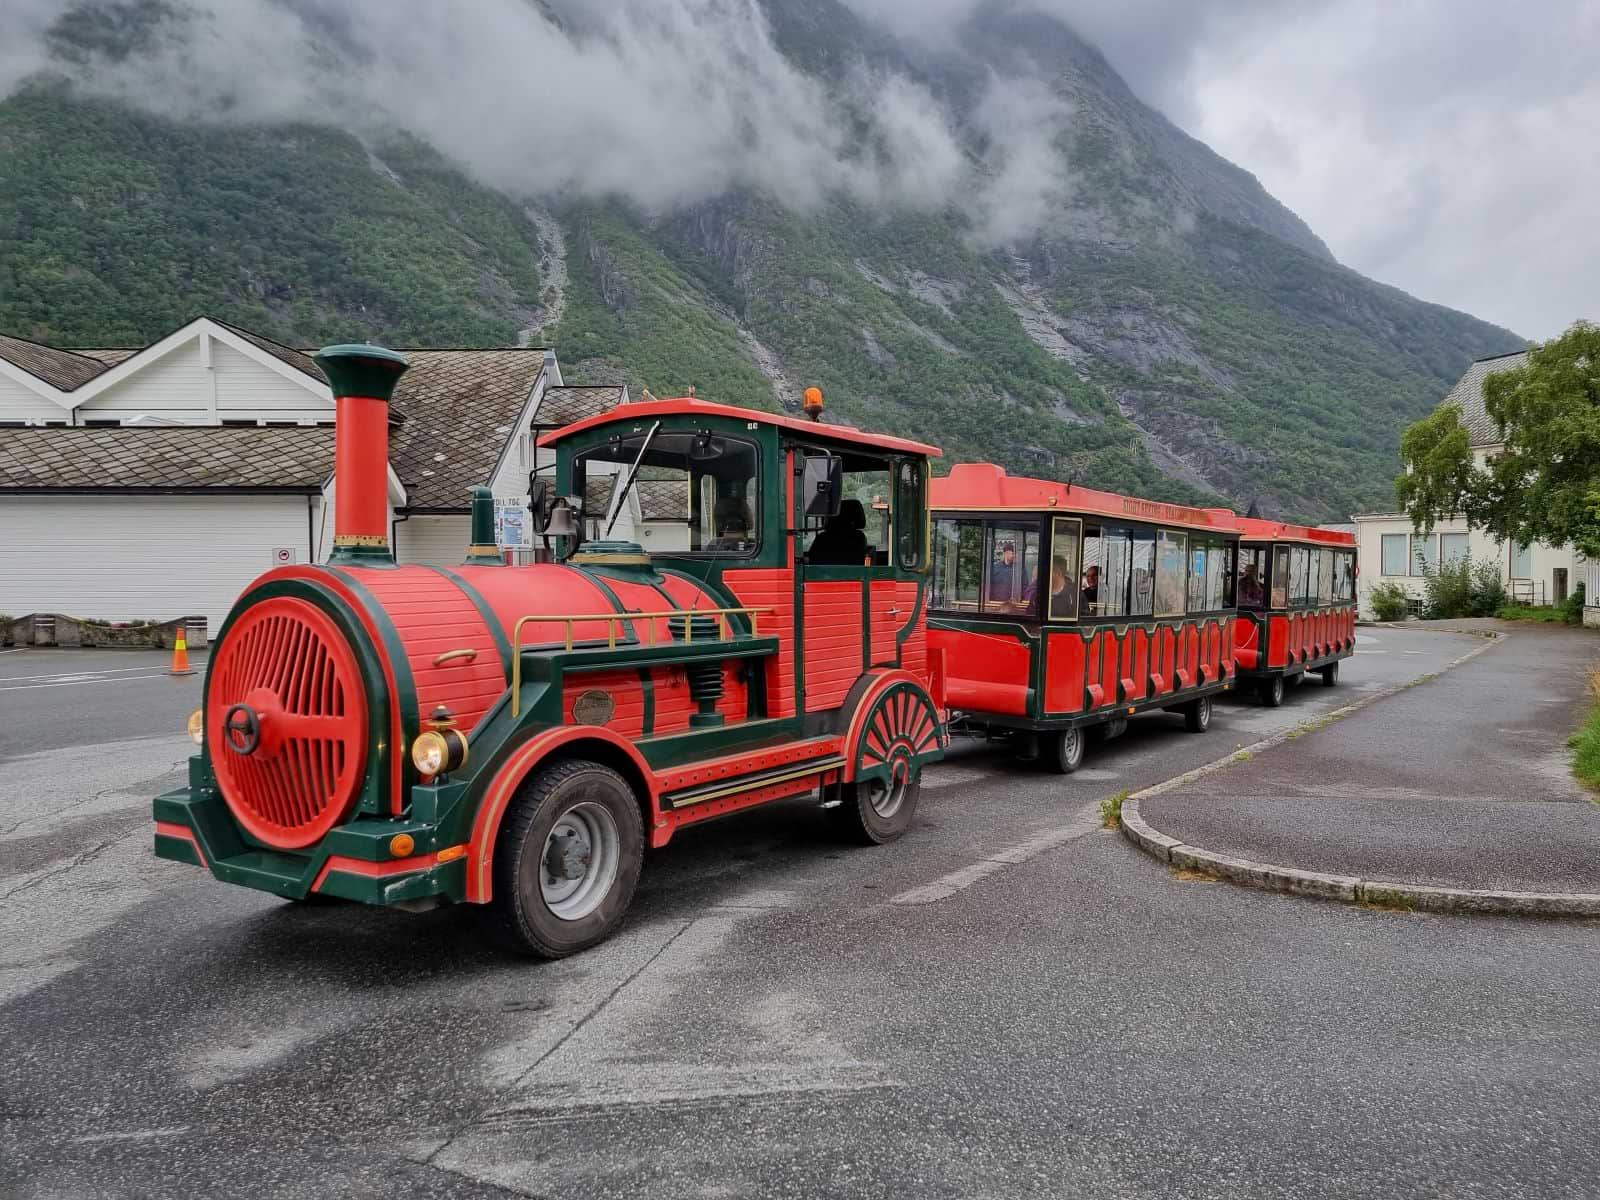 Red and green mini train on wheels (the Trolltrain) parked in Eidfjord.